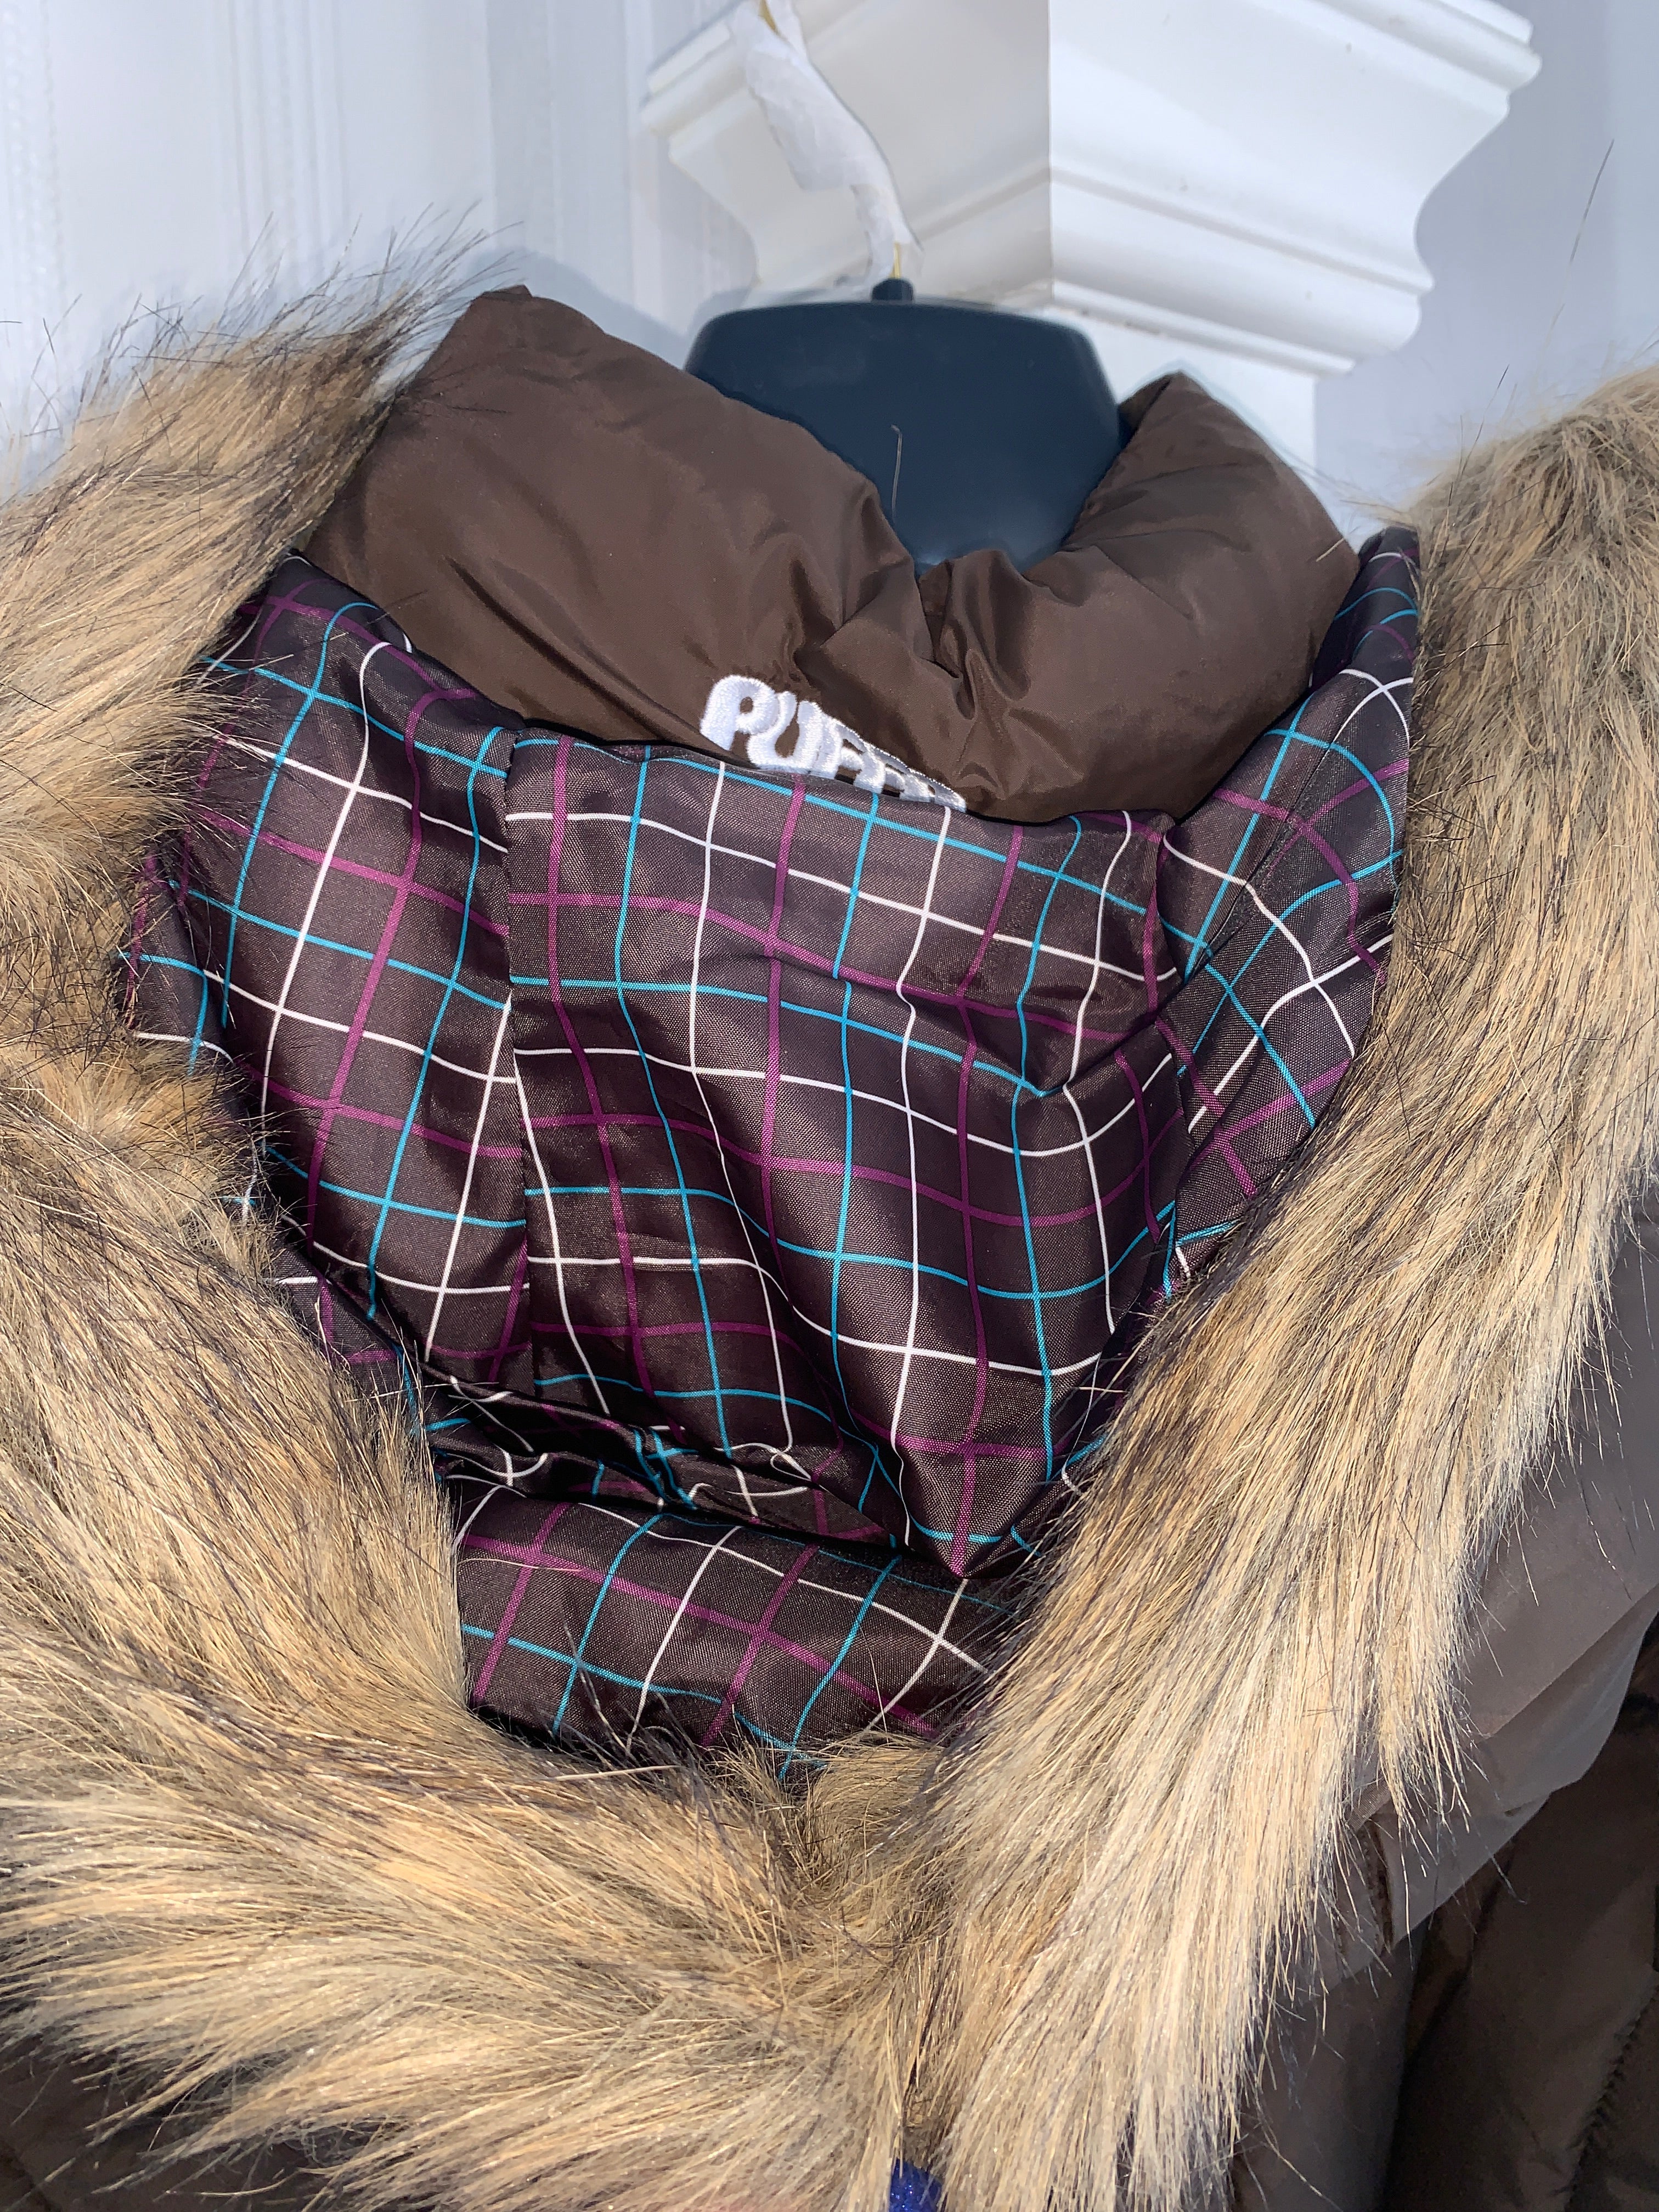 Puffa Mid Length Warm Winter Jacket - Size 8 - Rrp £120